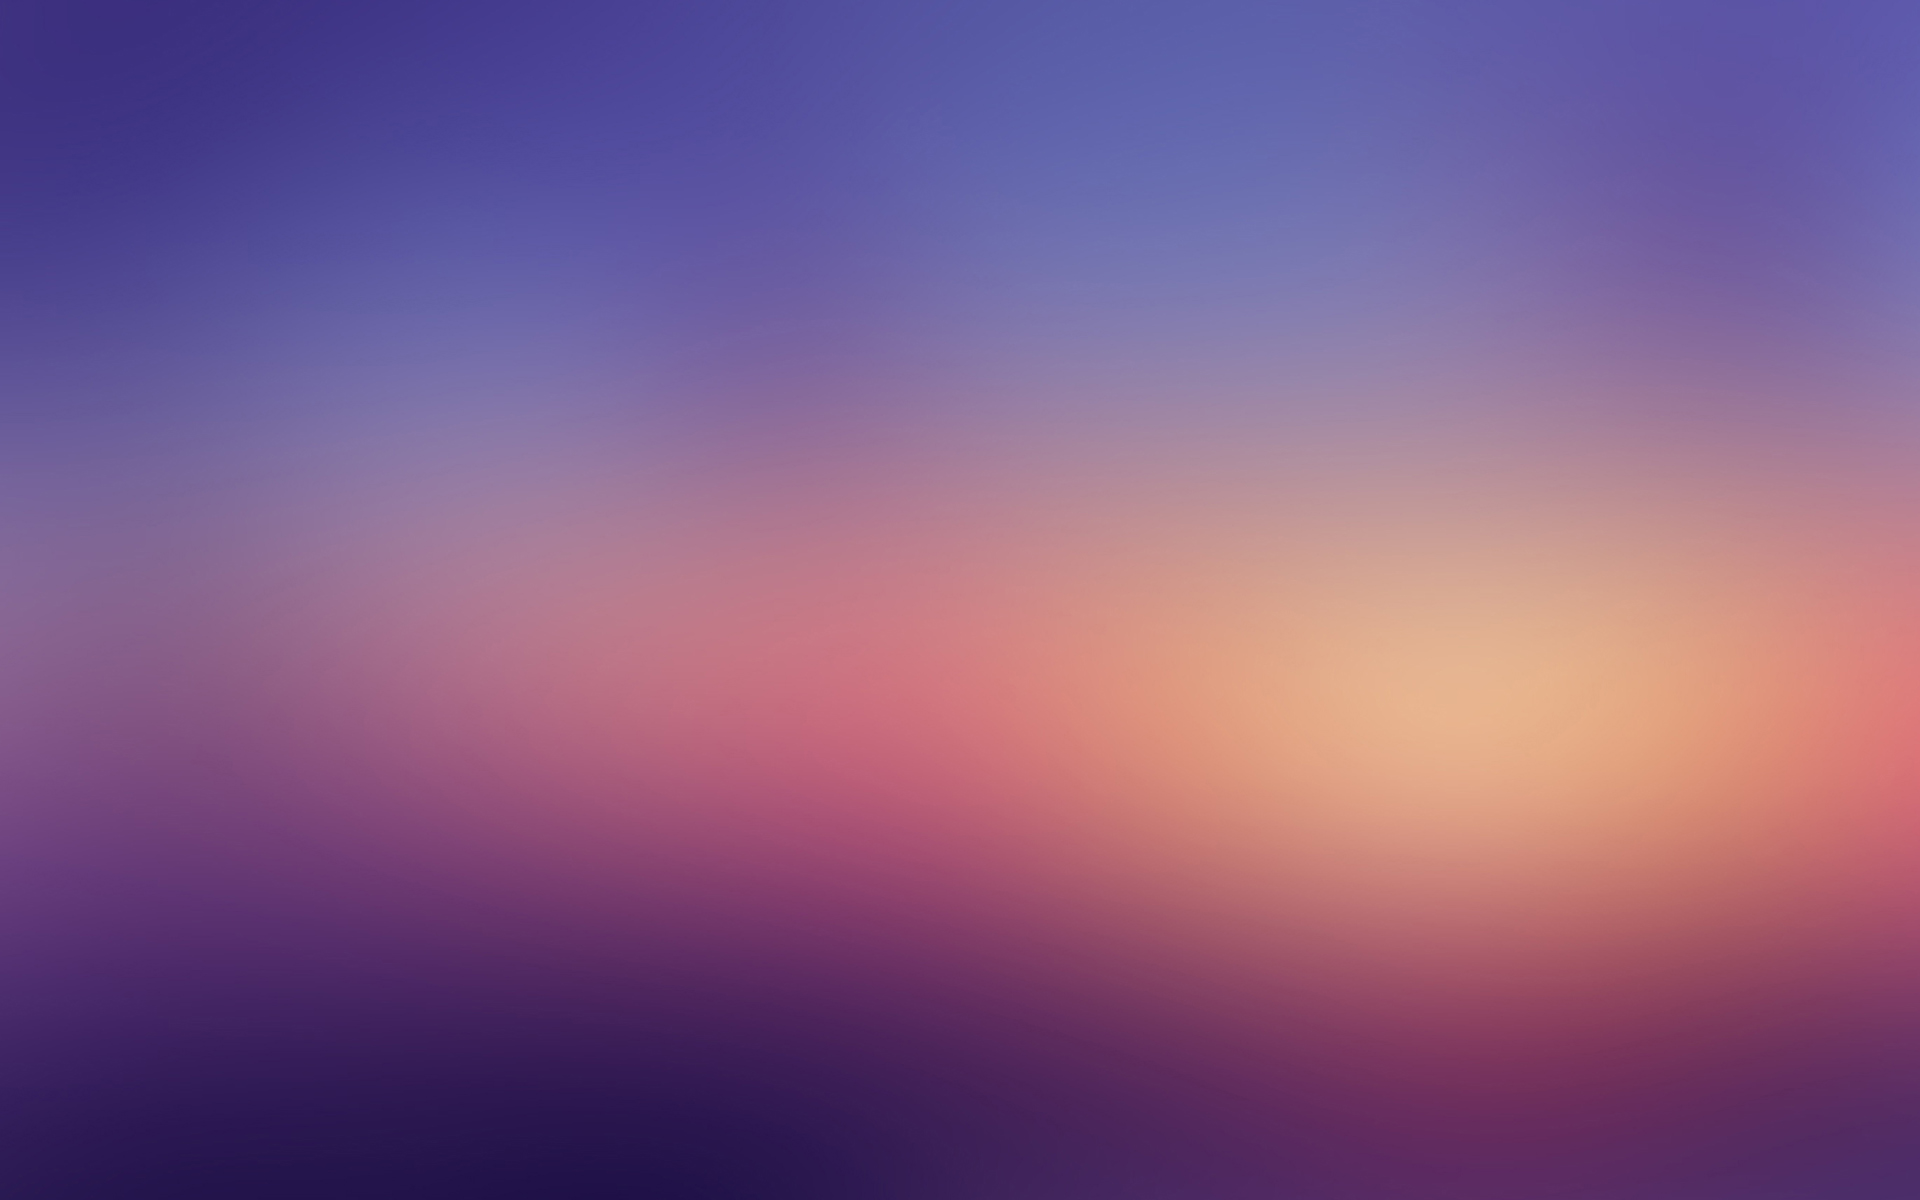 General 1920x1200 minimalism gradient blurred simple background purple pink orange